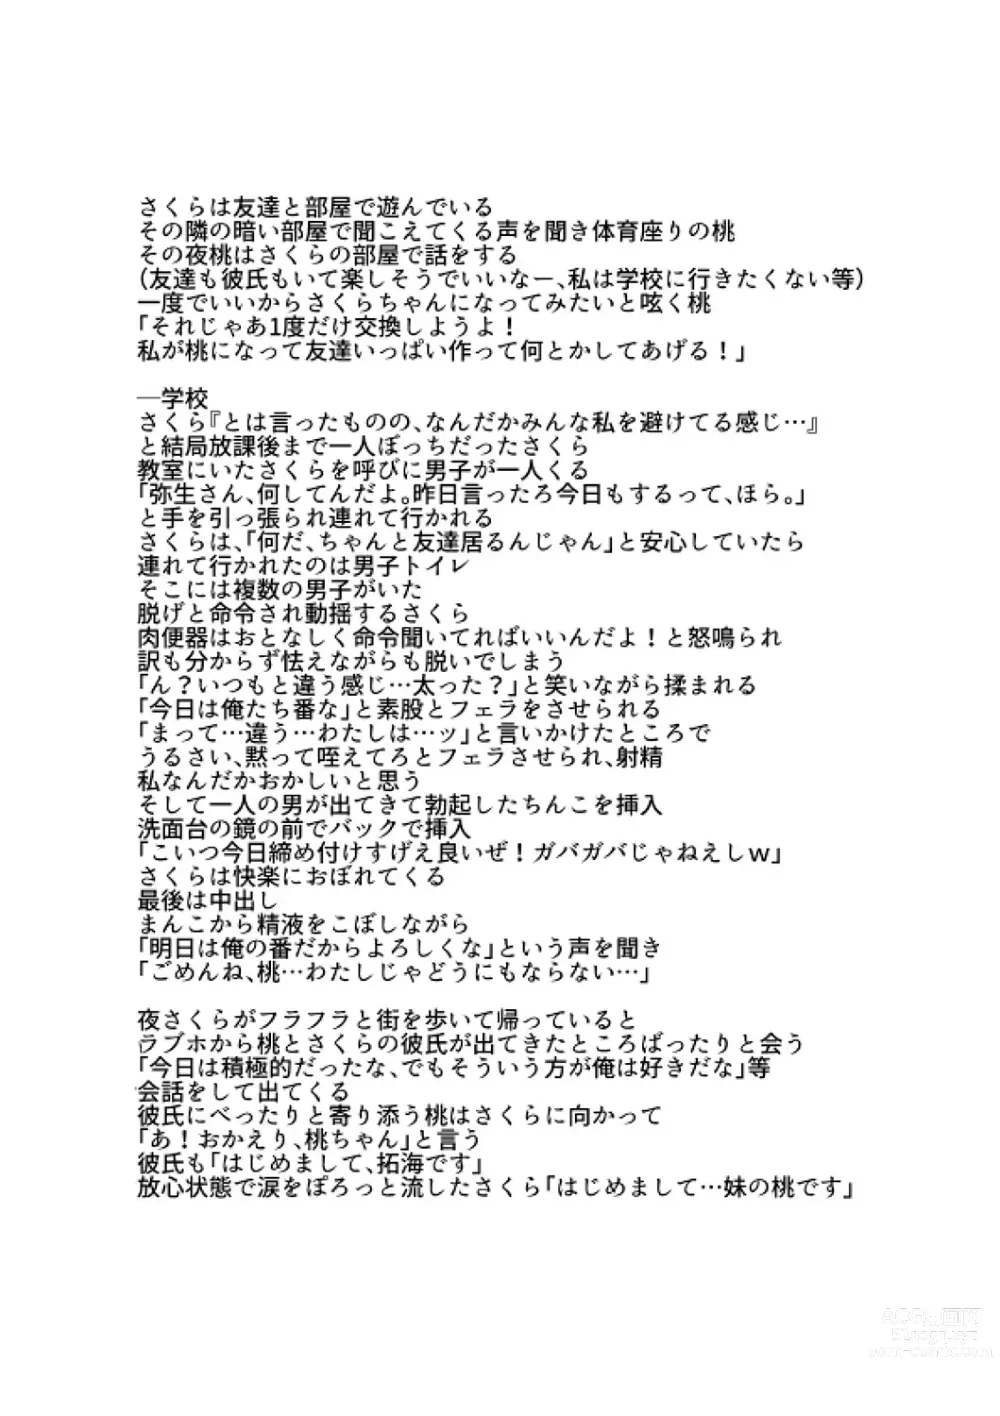 Page 211 of manga Kowashite Asobo + DLsite Gentei Chara Settei & Plot